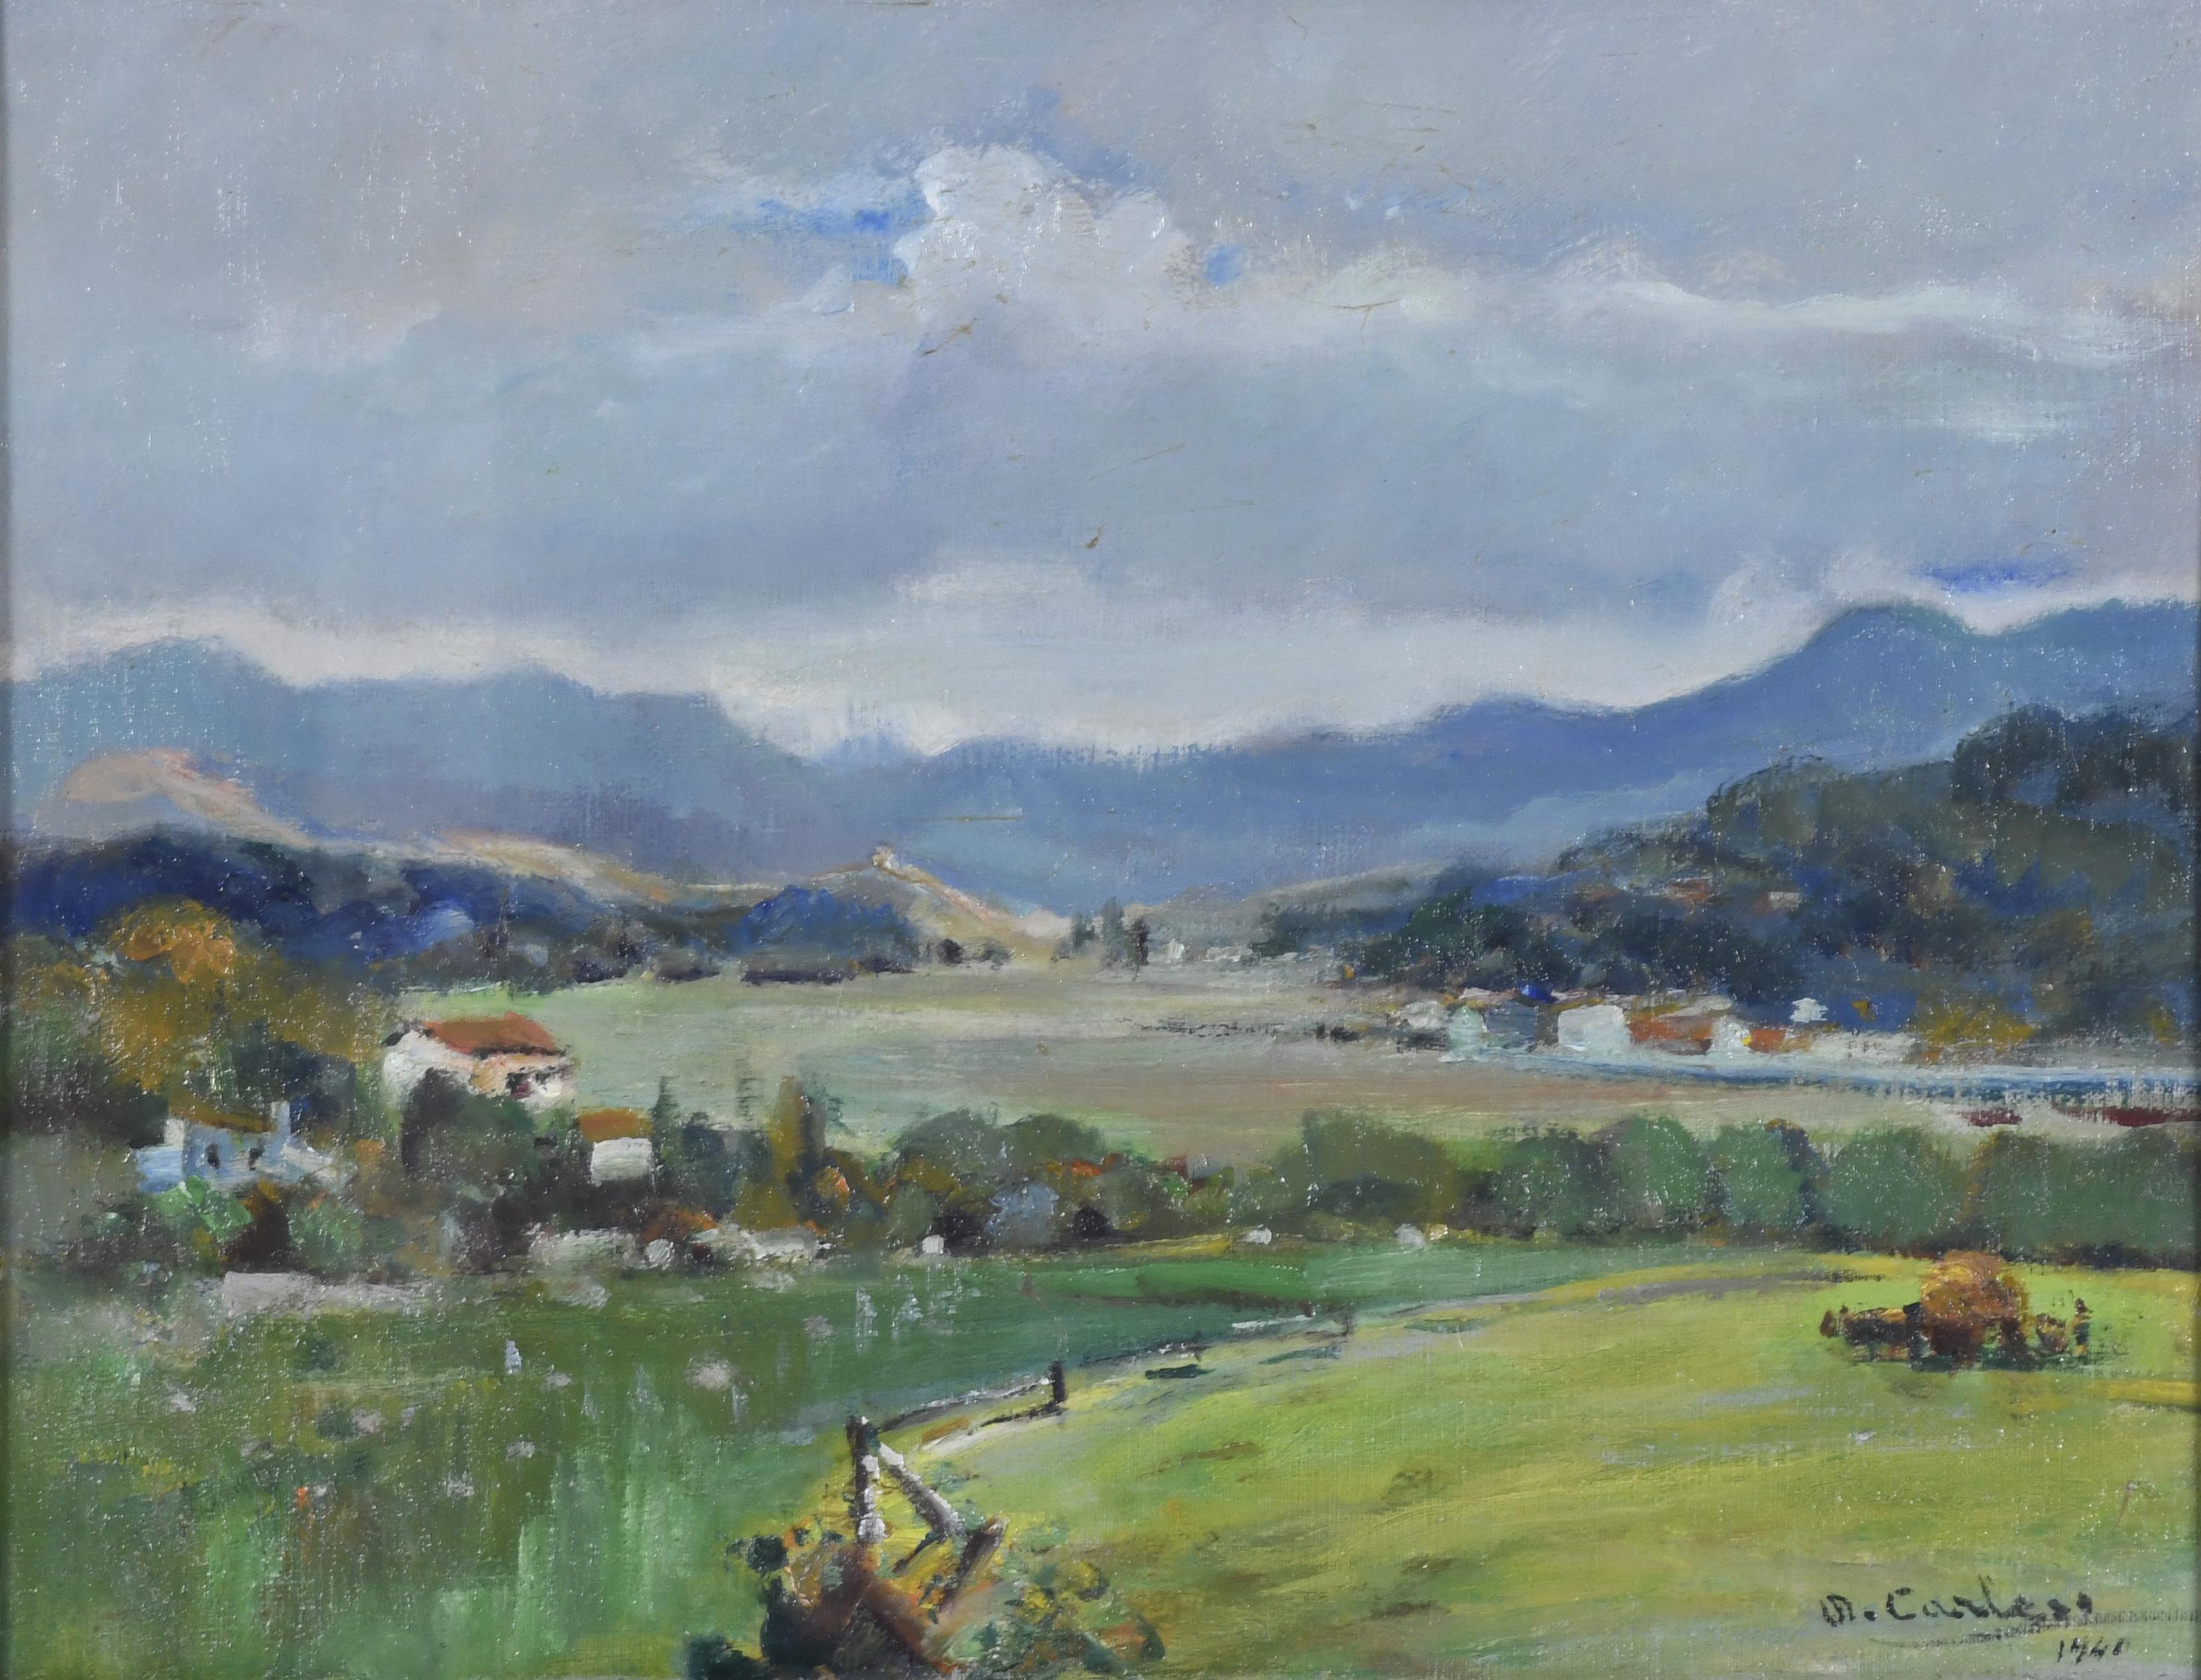 DOMINGO CARLES ROSICH (1888-1962). "PAISAJE", 1940.